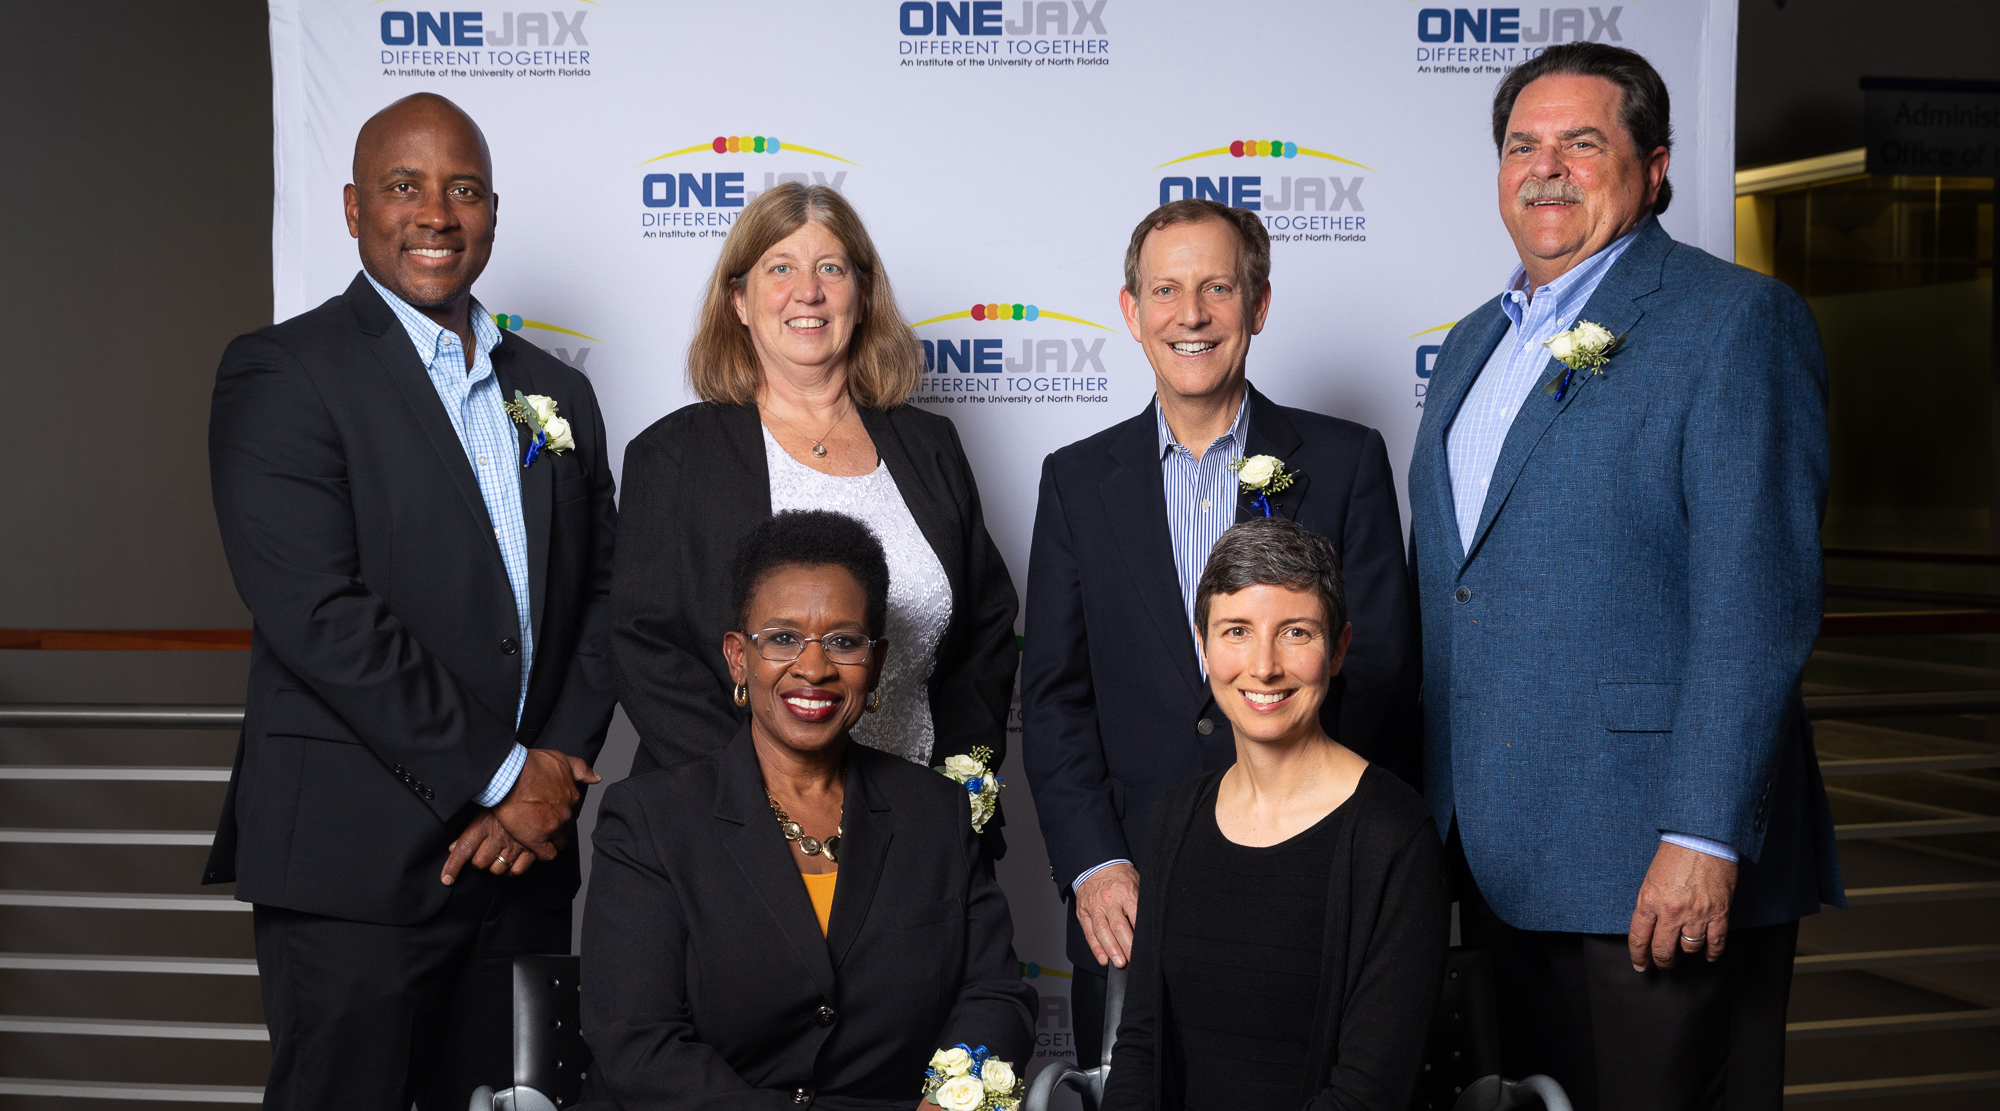 OneJax Humanitarian Award Honorees standing together against a OneJax backdrop